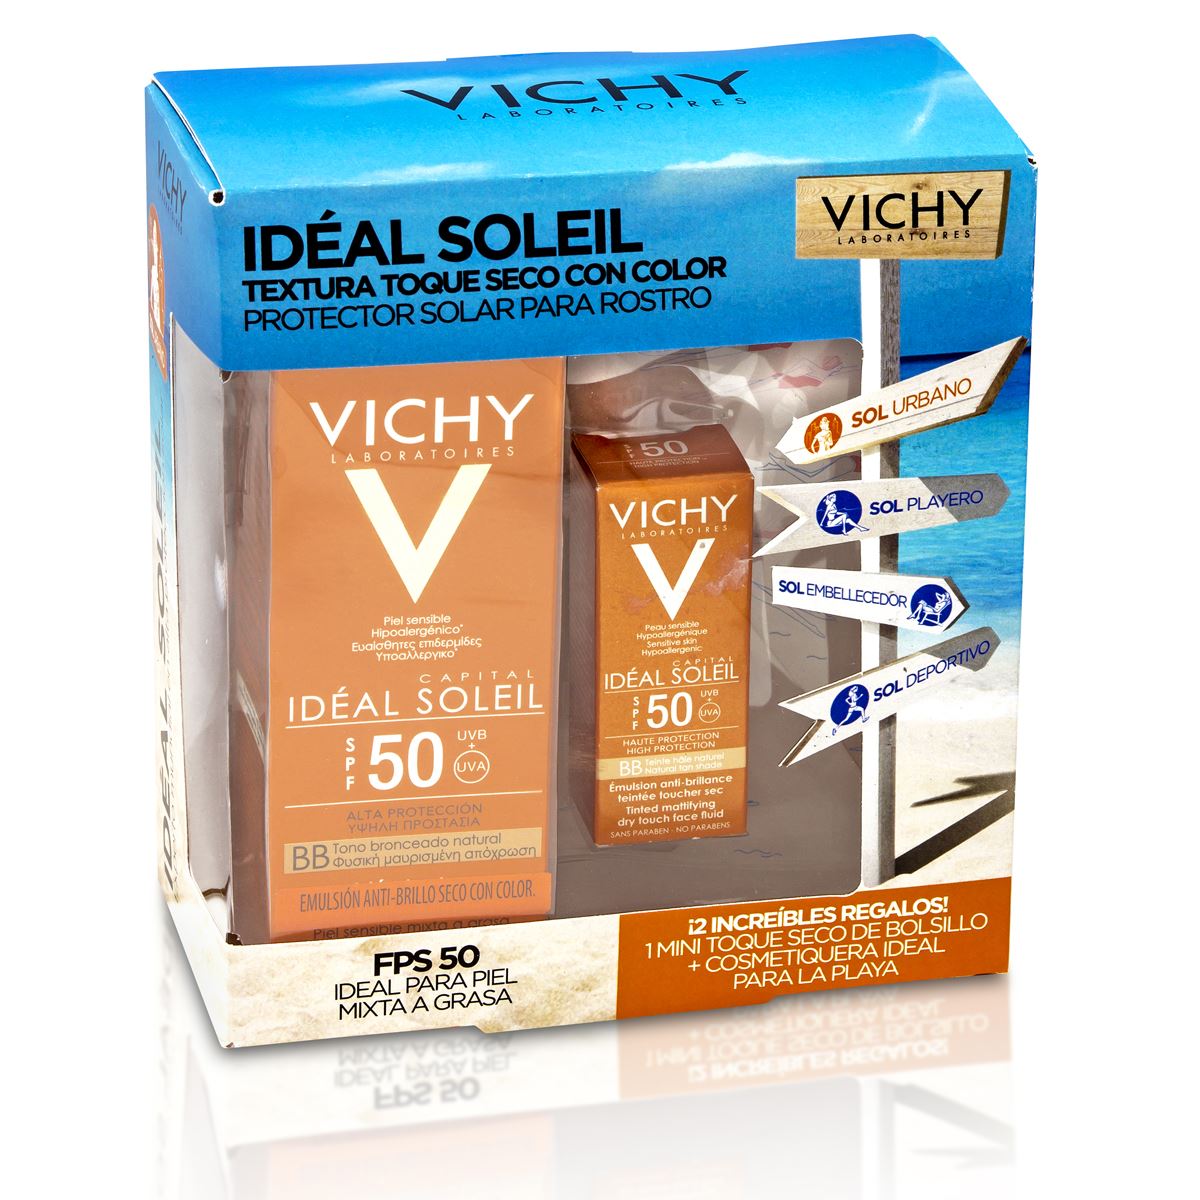 Vichy Ideal Soleil Verano Toque Seco bb + Gwp